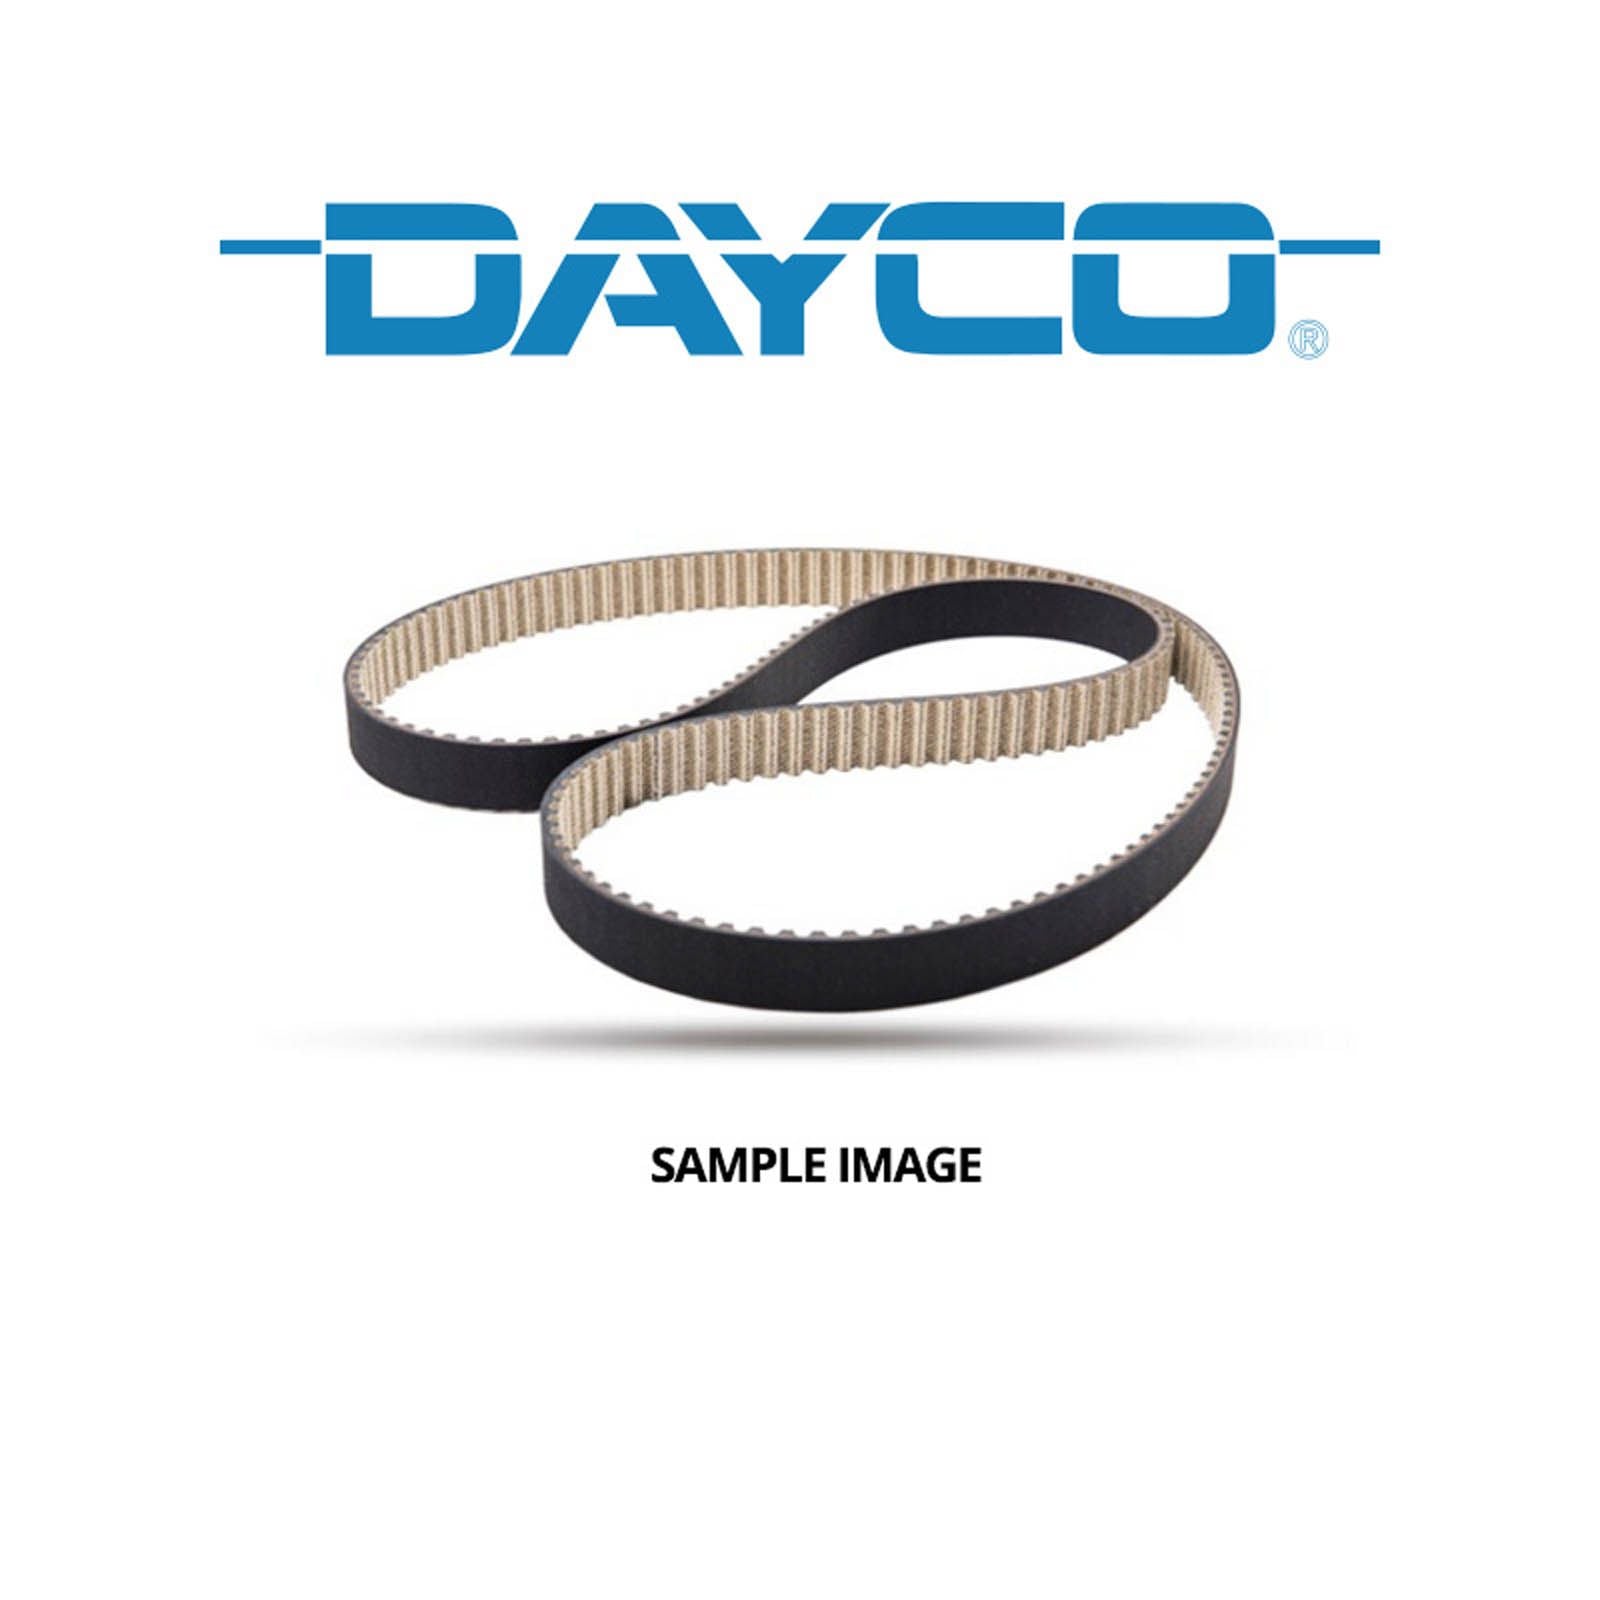 New DAYCO ATV Drive Belt HP 29.0 X 849 HP2027 #ATVDBHP2027